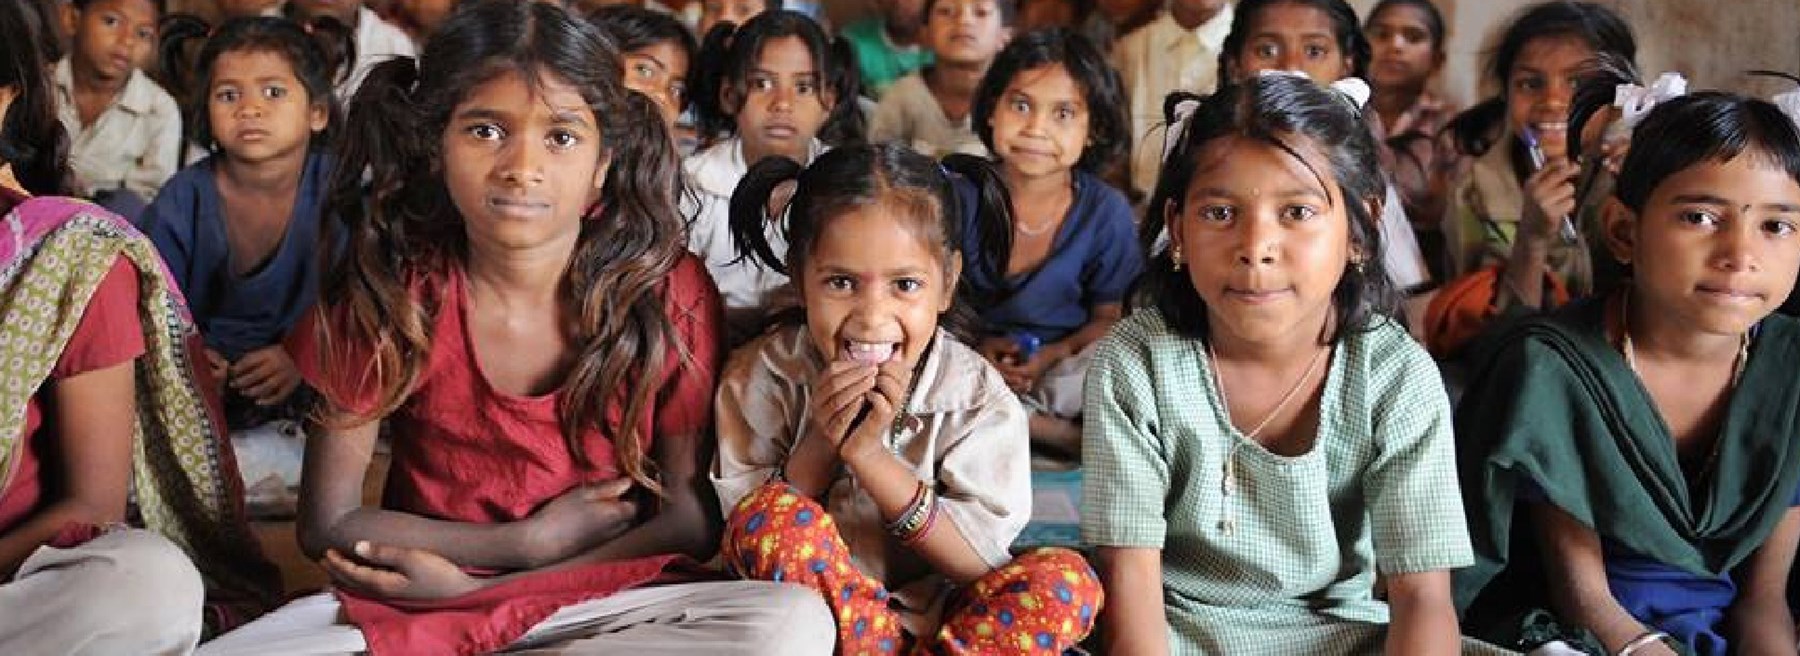 Hand in Hand children in India